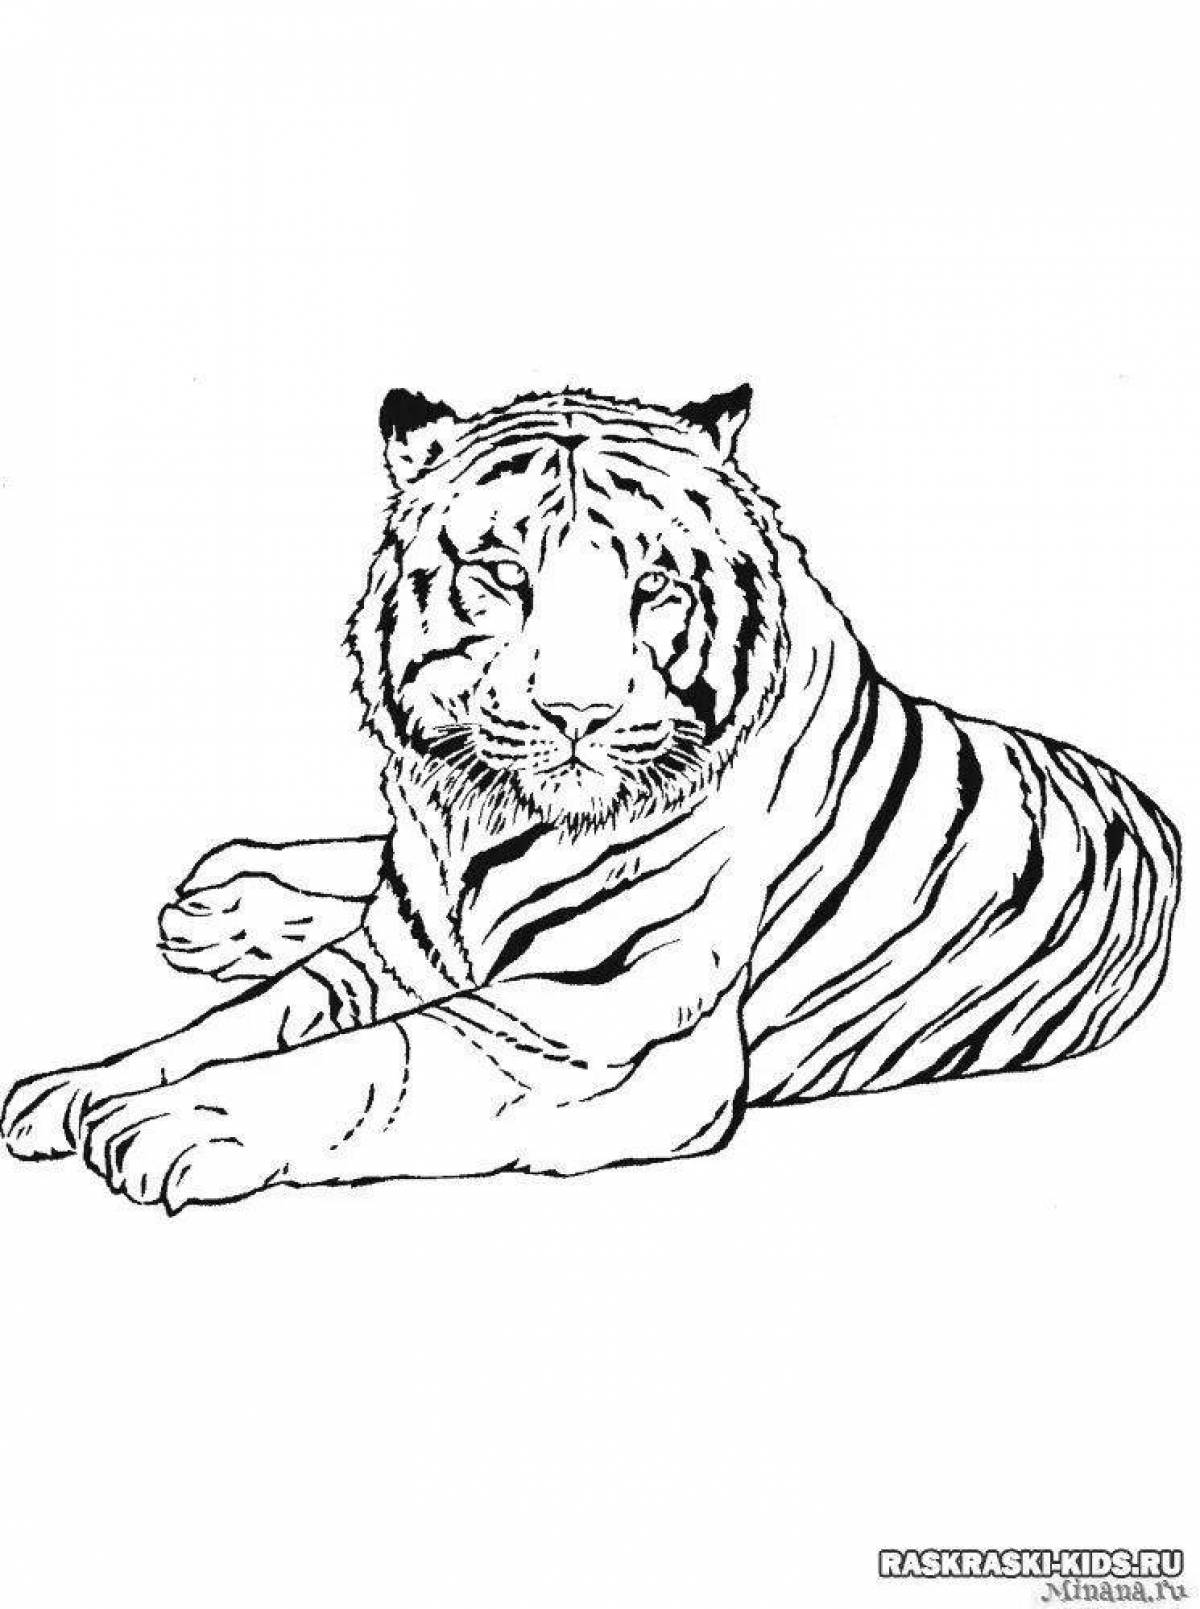 Alluring tiger drawing